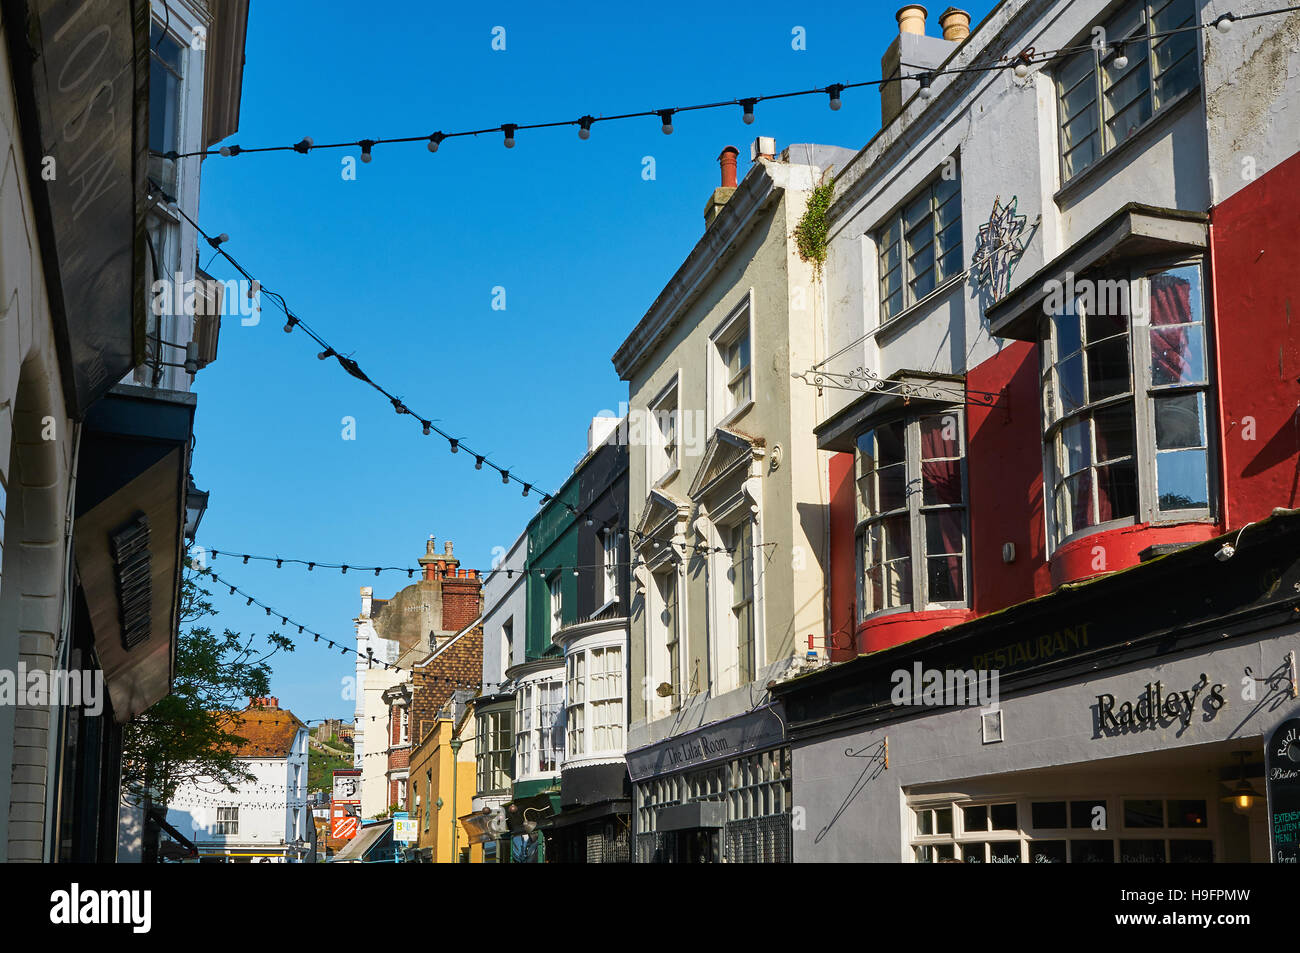 George Street, Hastings Old Town, East Sussex, Reino Unido Foto de stock